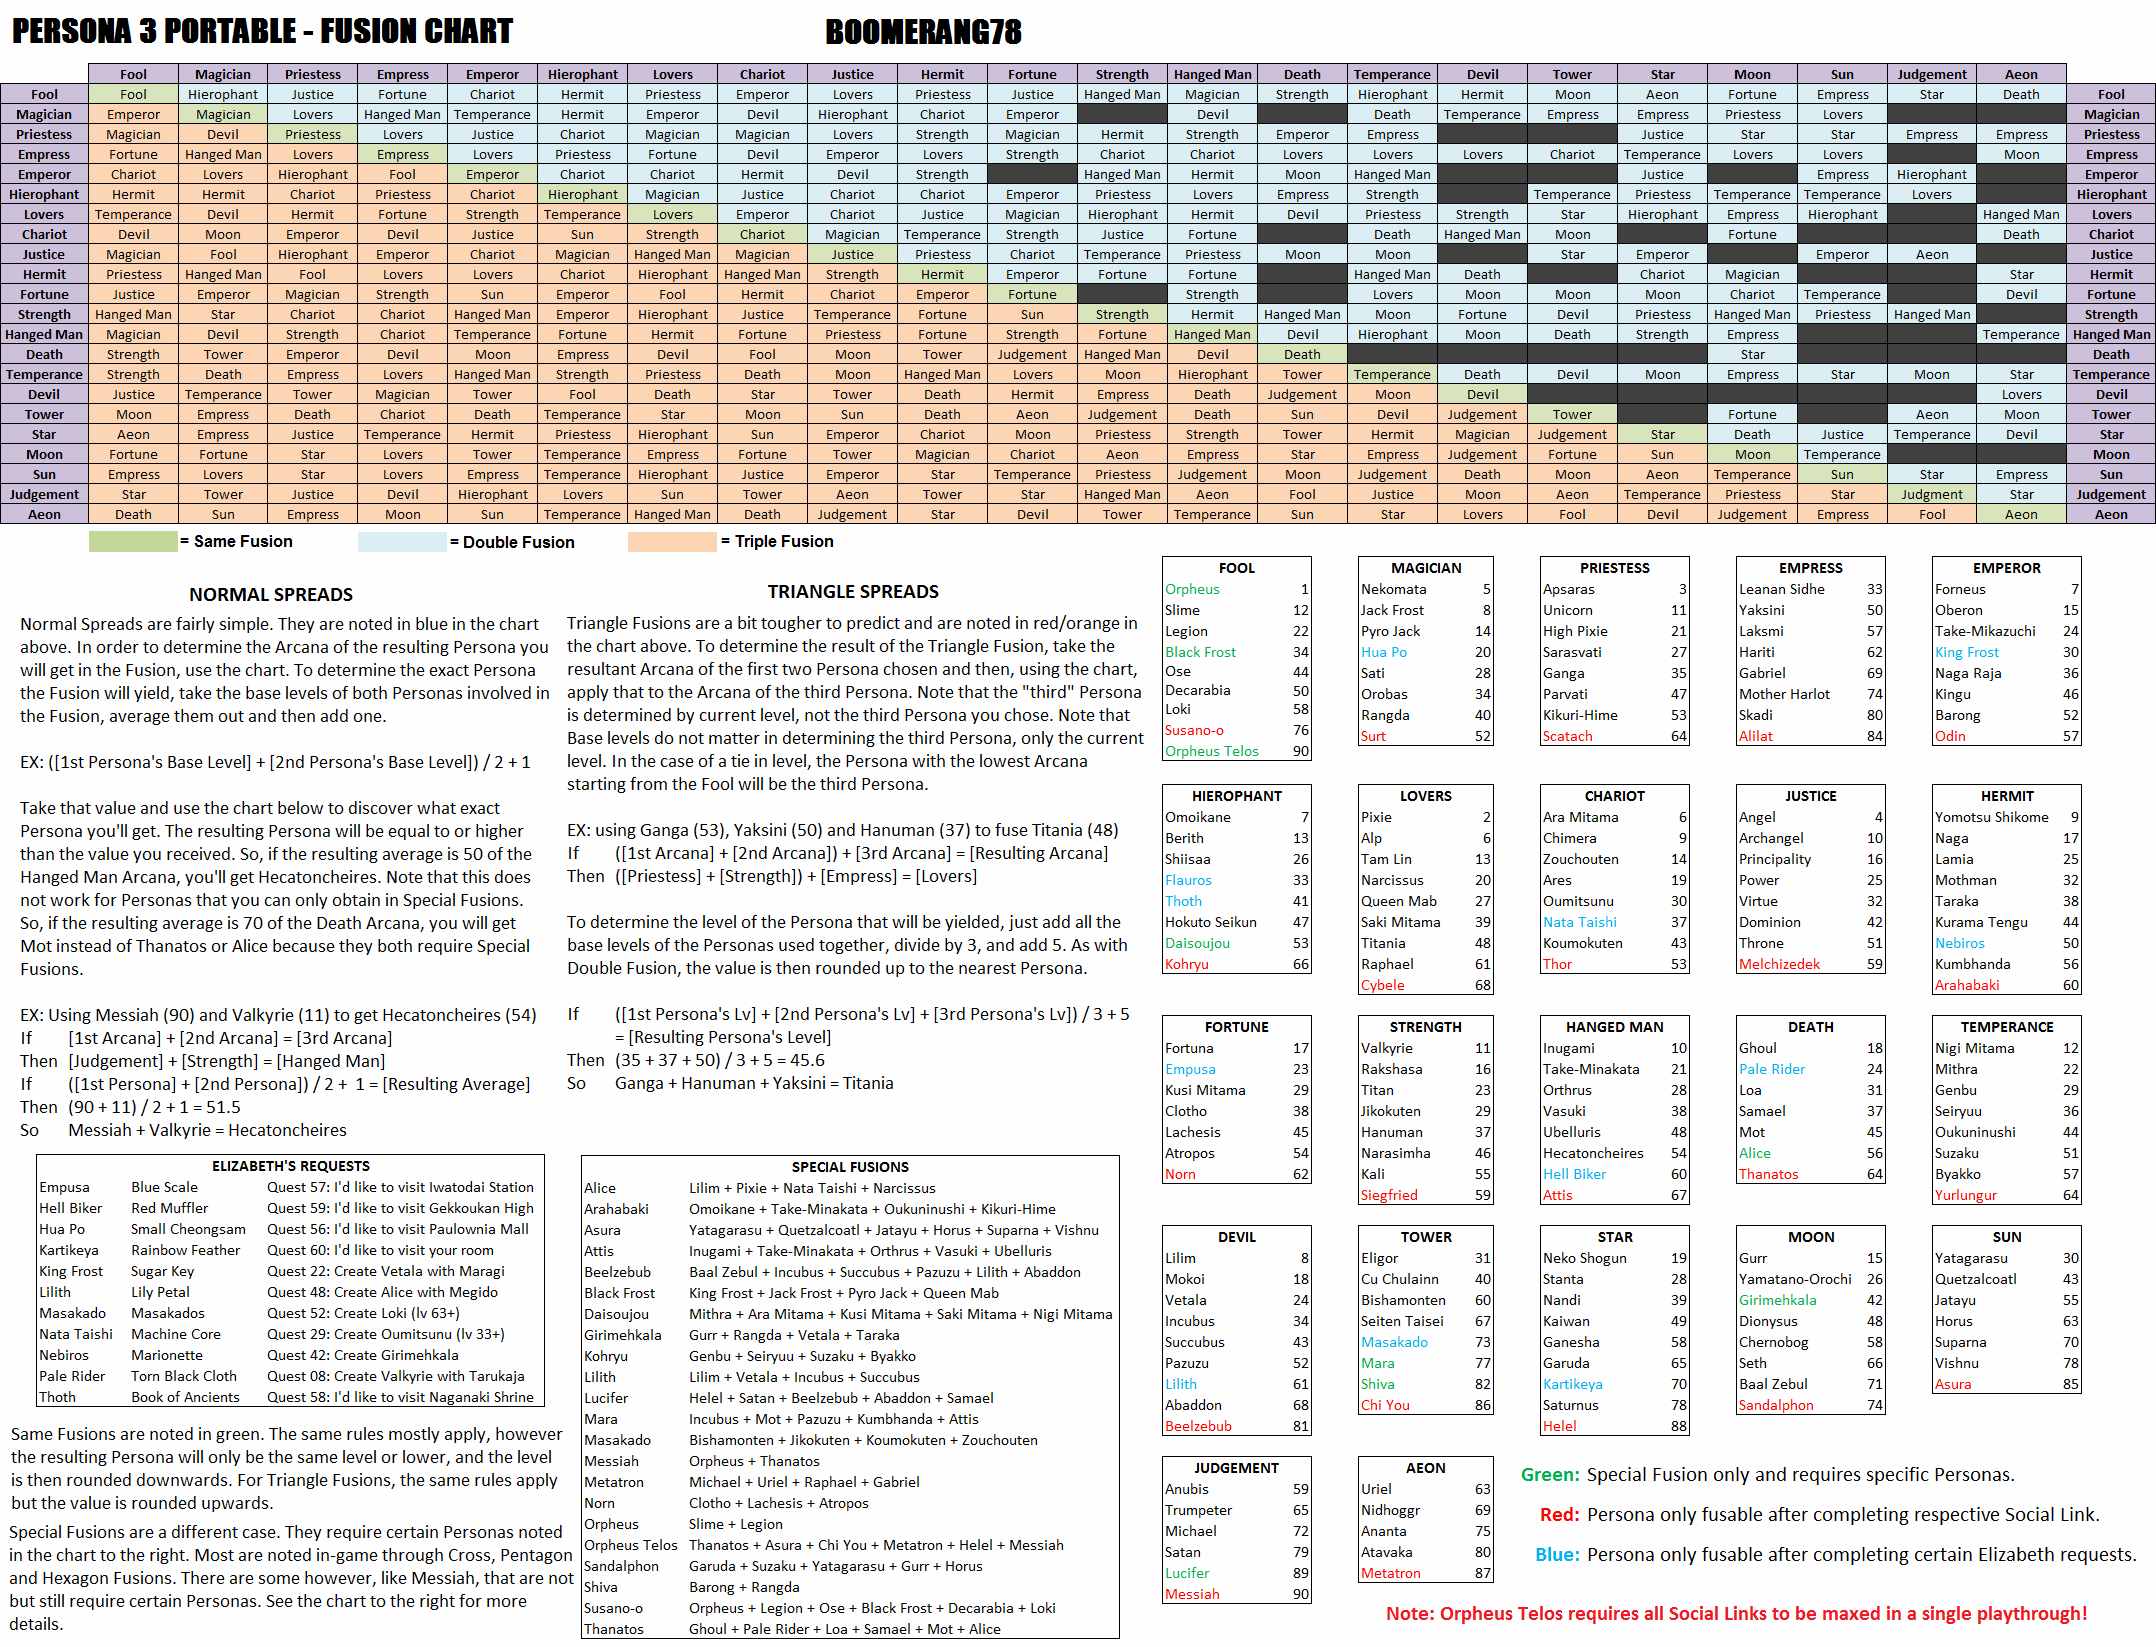 Persona 5 Fusion Chart